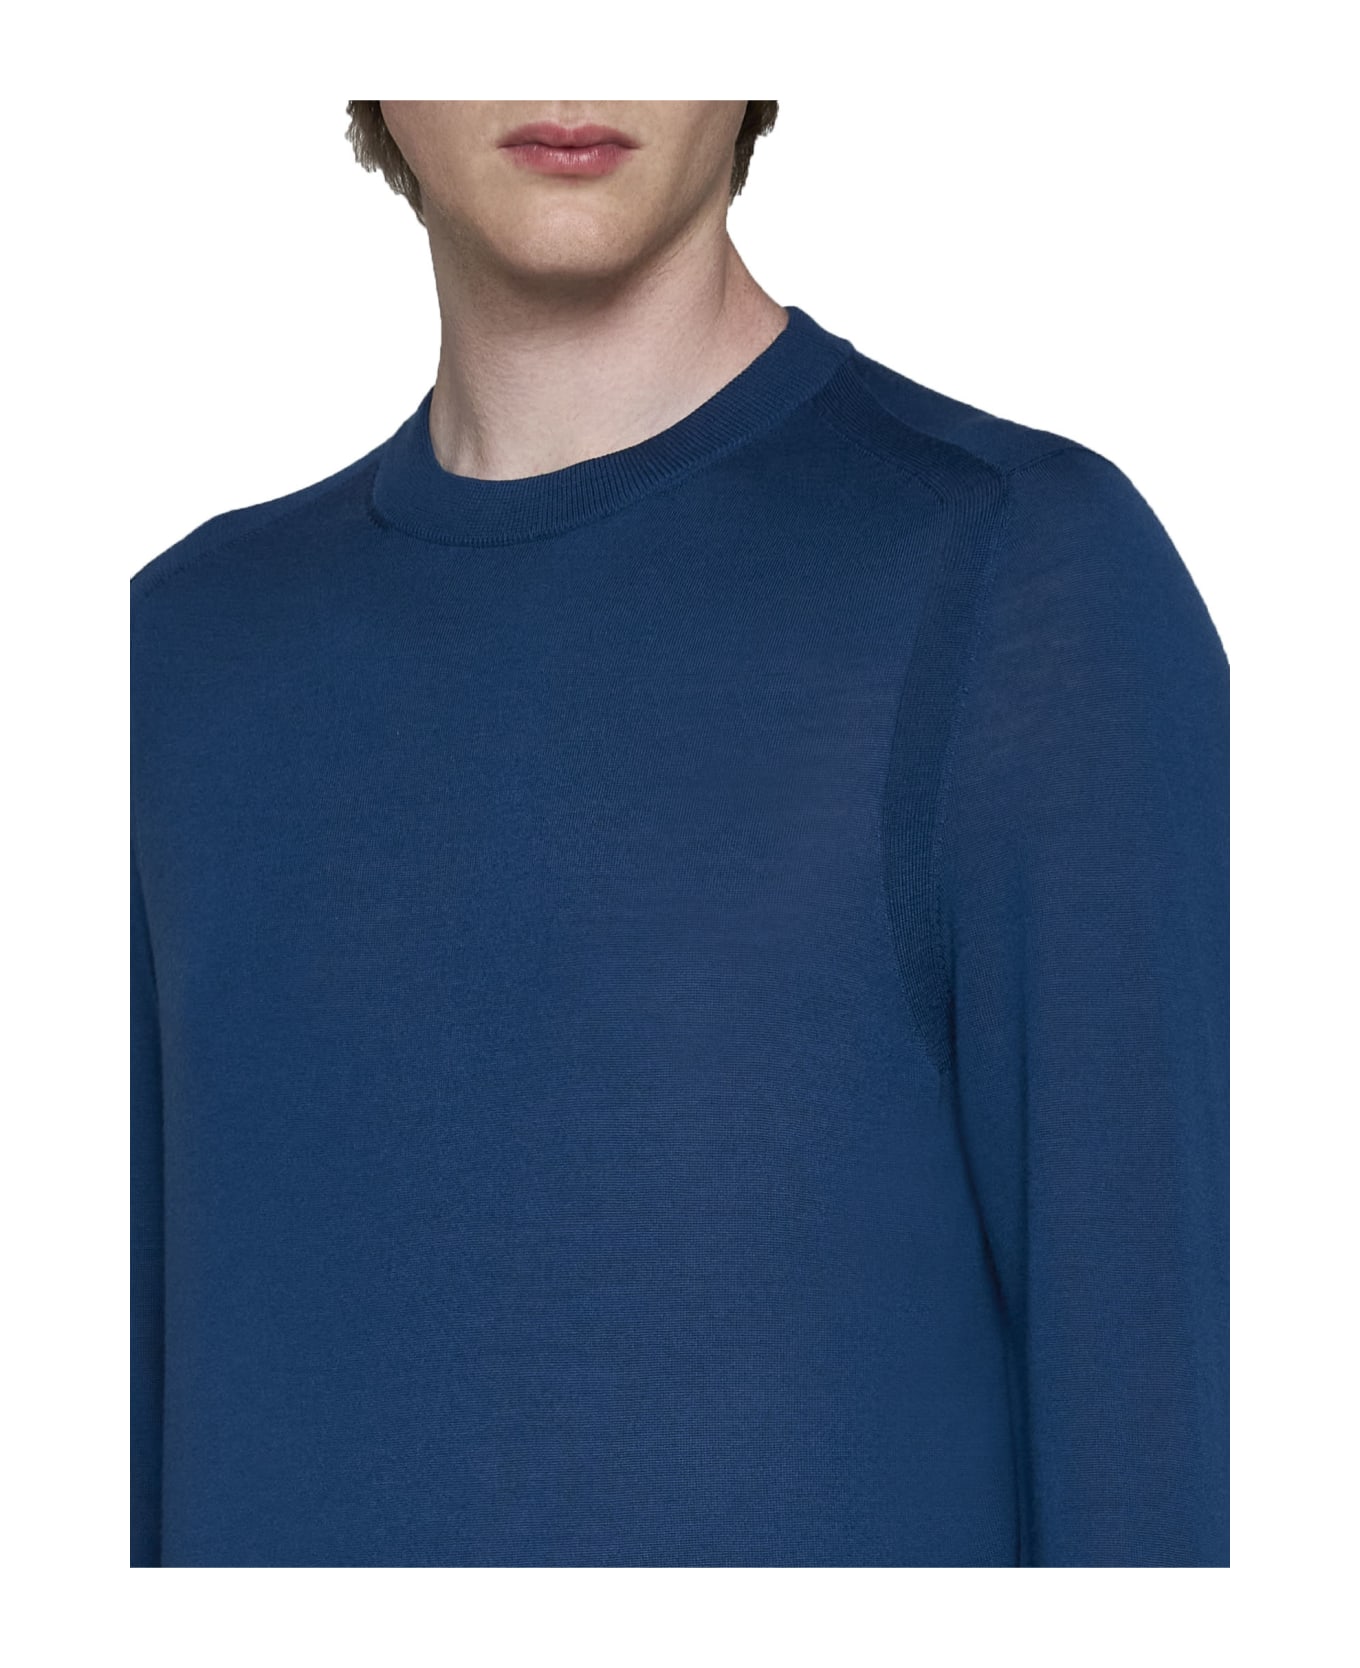 Paul Smith Sweater - Petrol blue ニットウェア